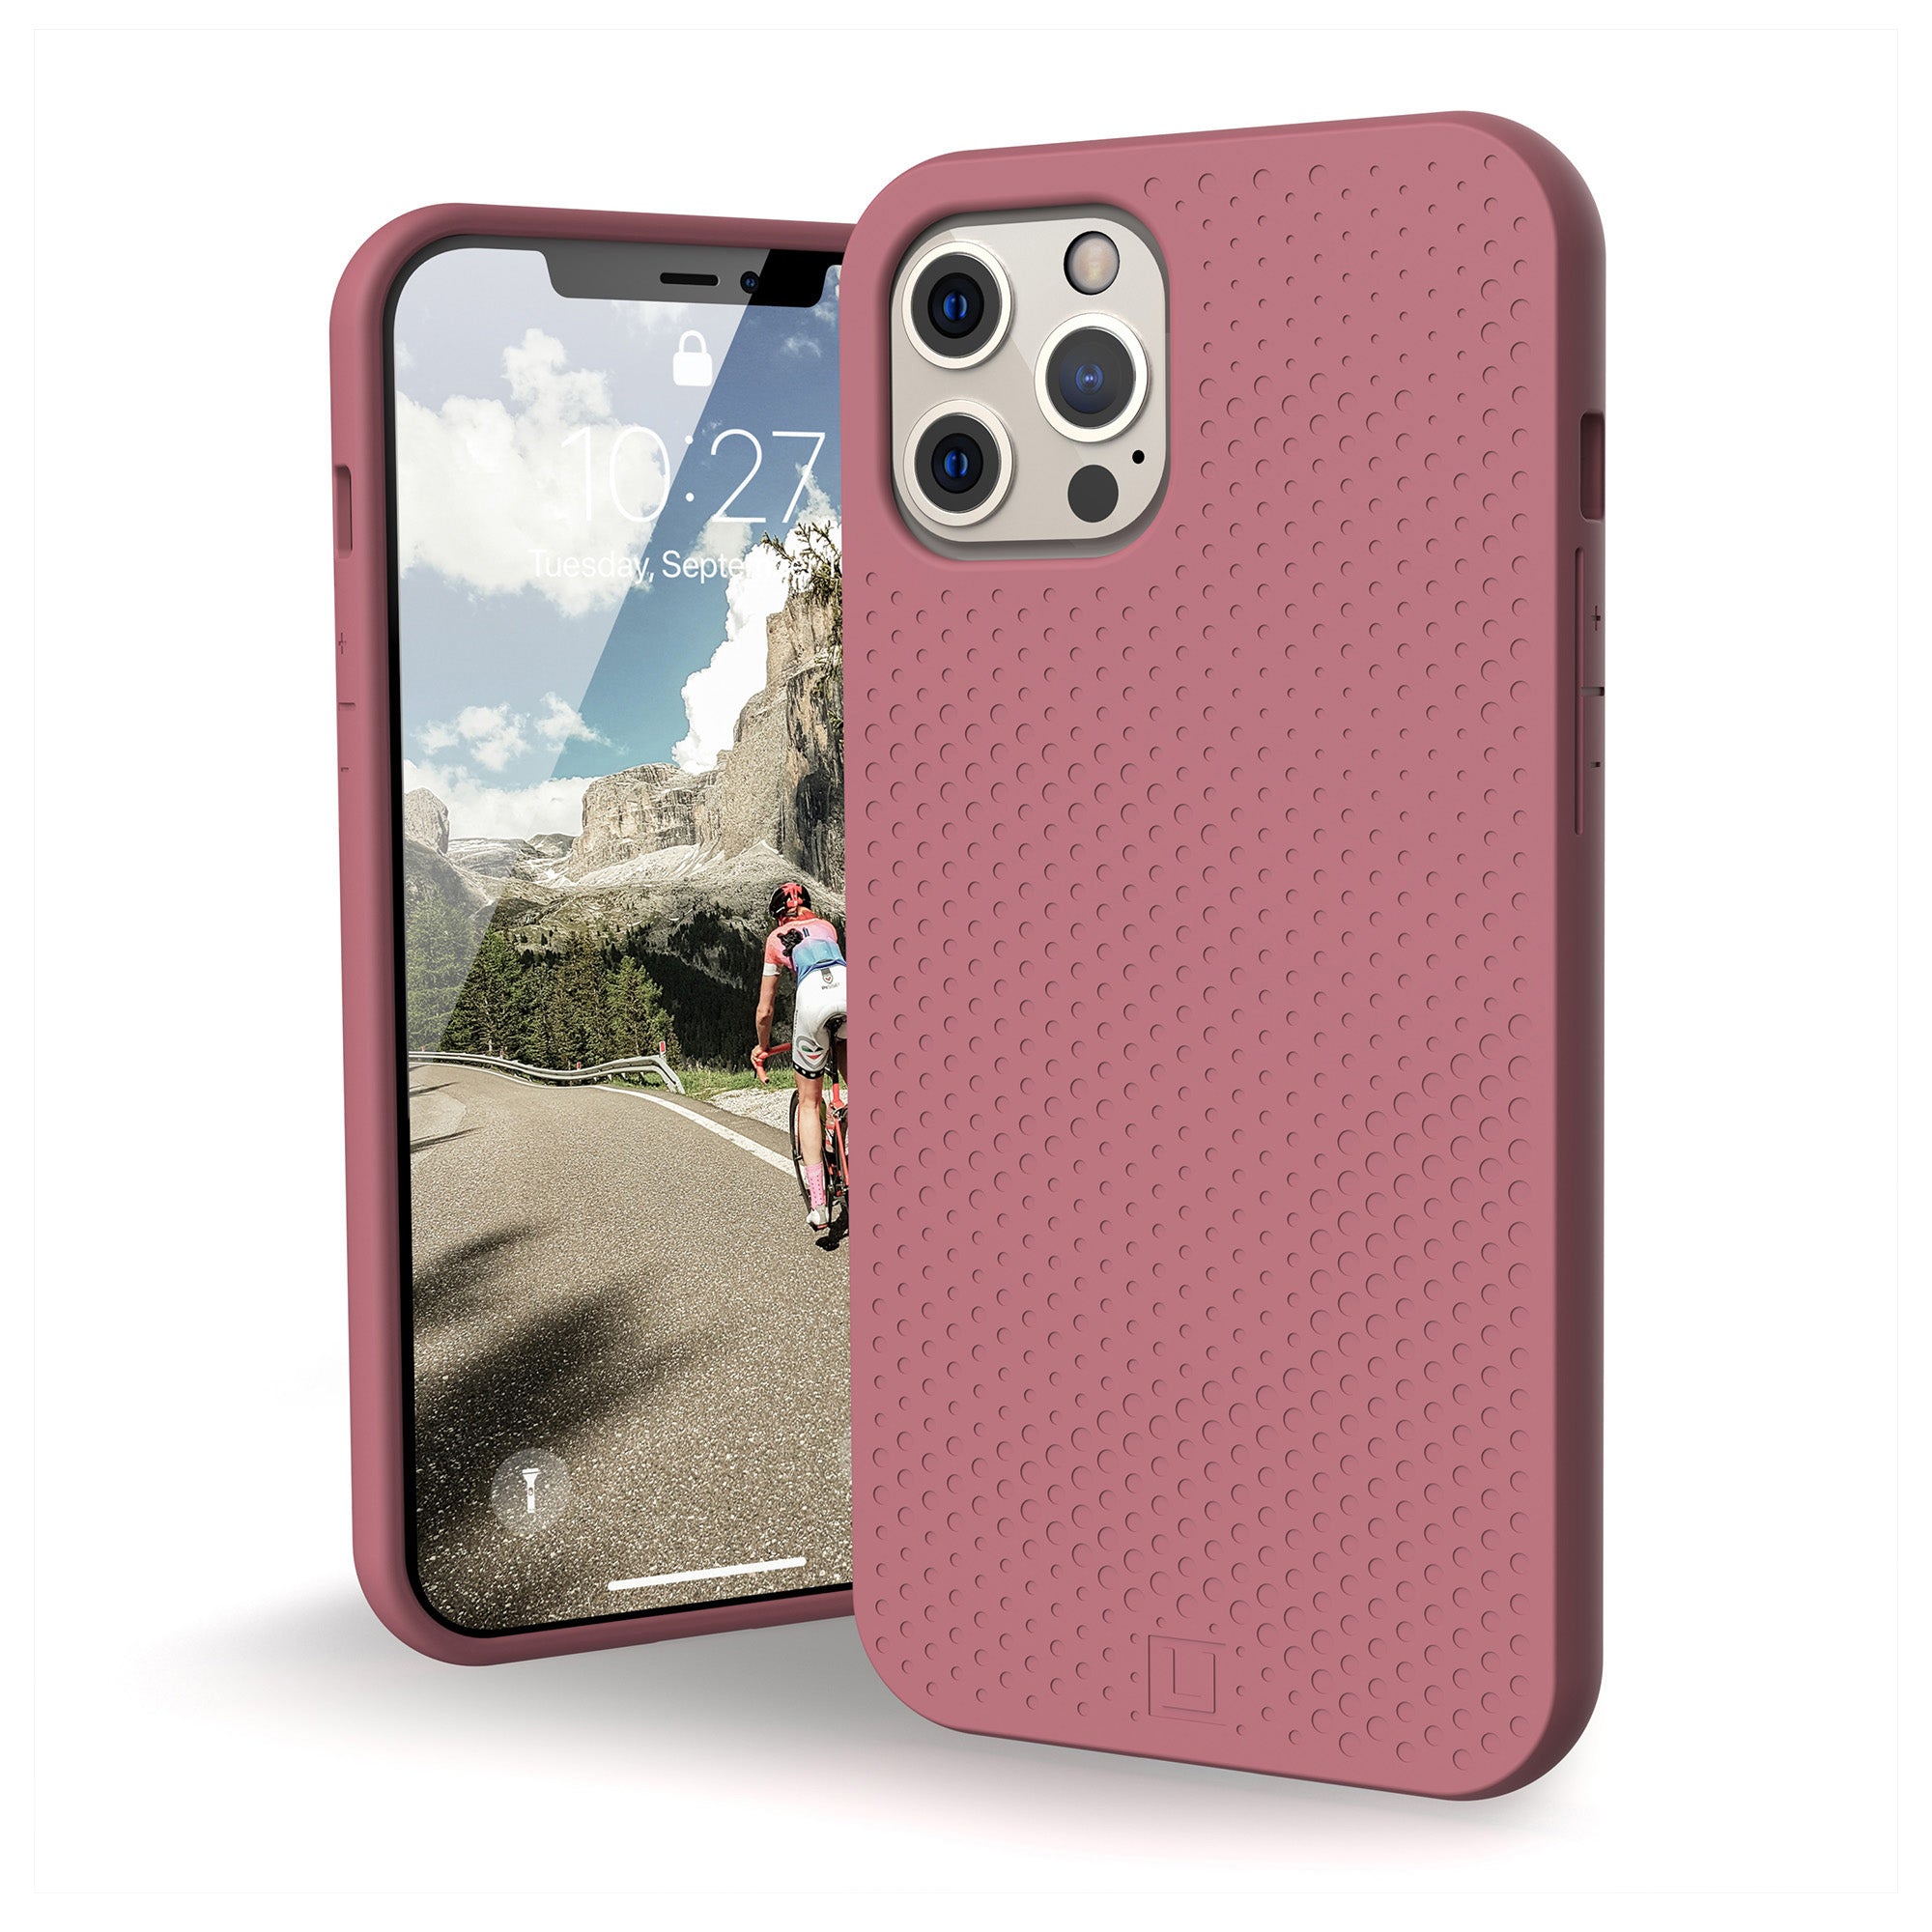 iPhone 12 Pro Max UAG Dusty Rose Dot Case - 15-08746